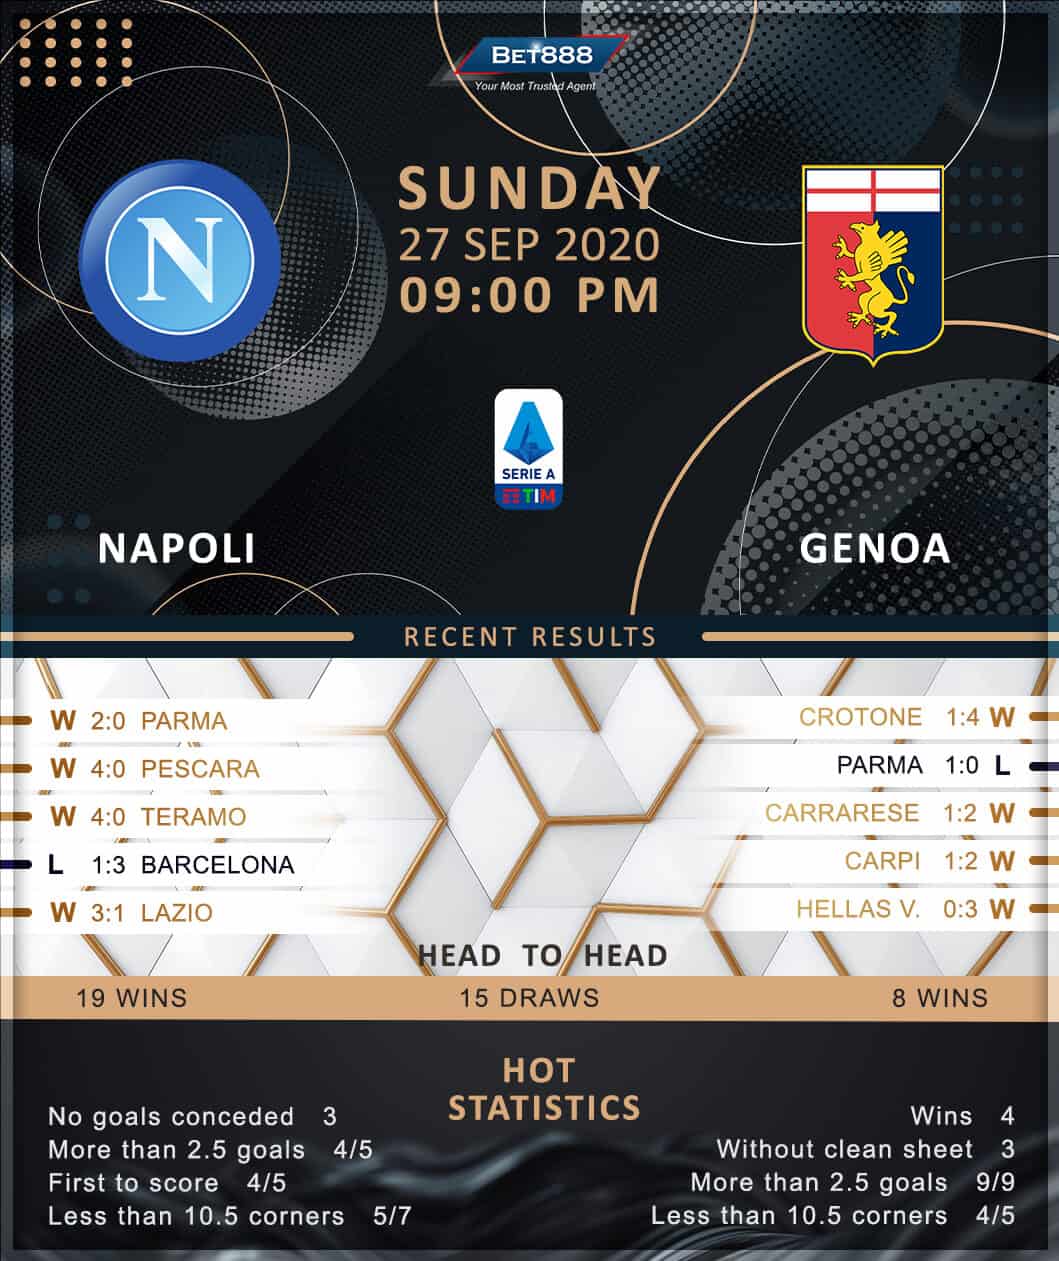 Napoli vs Genoa 27/09/20